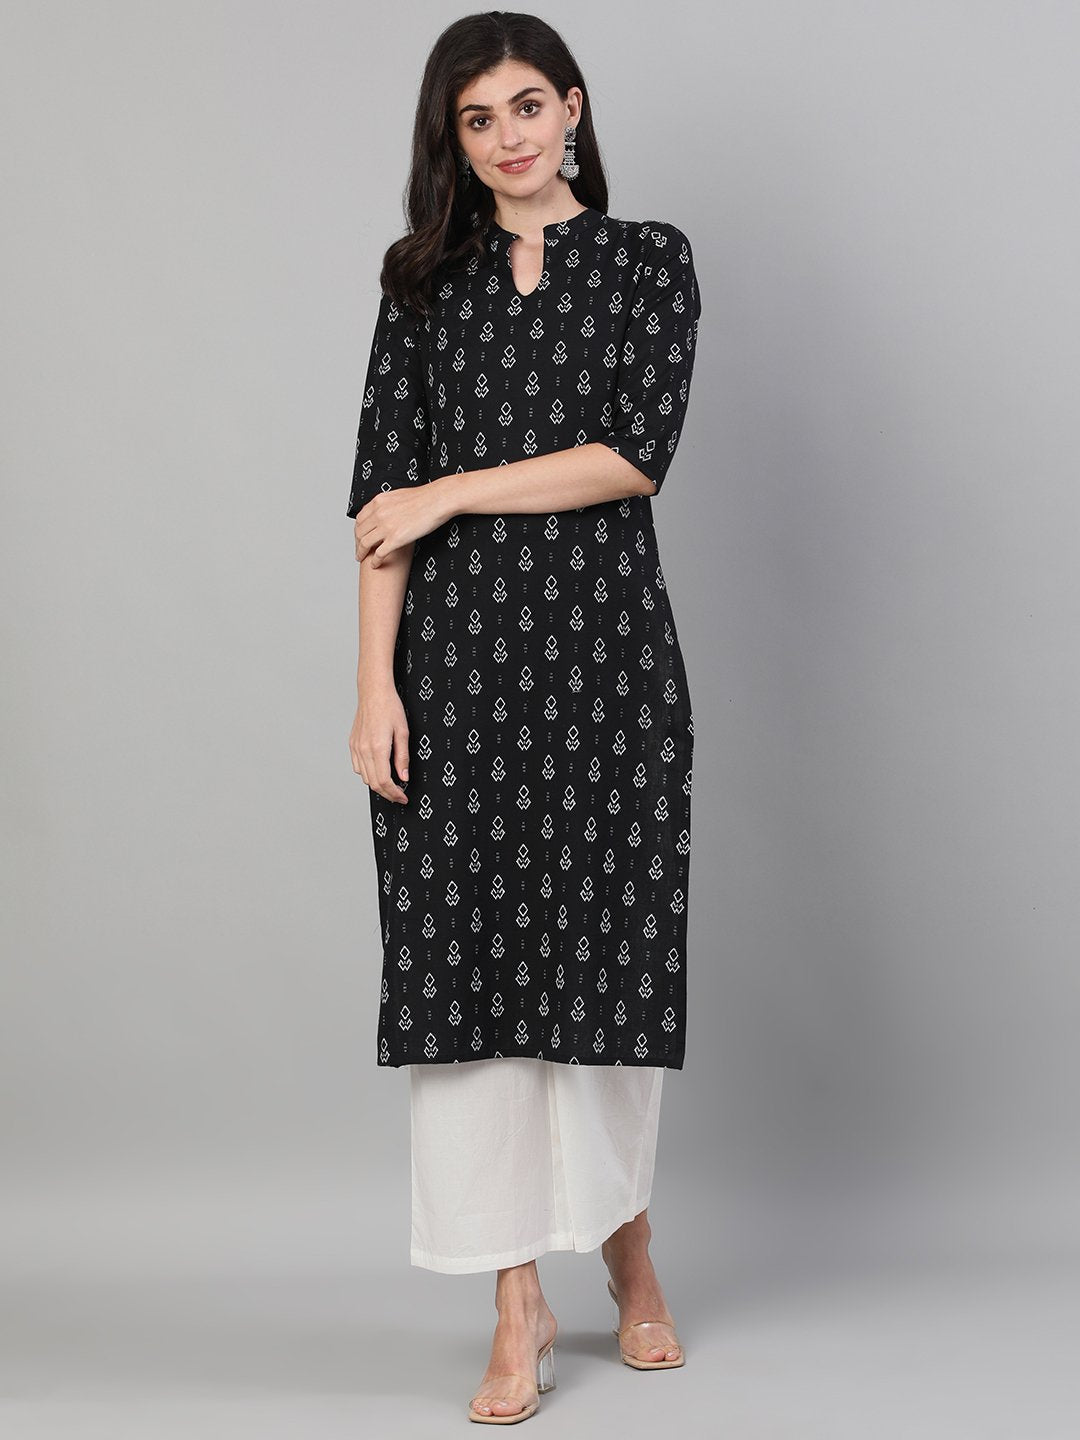 Women's Black Calf Length Three-Quarter Sleeves Straight Geometric Printed Cotton Kurta With Pockets And Face Mask - Nayo Clothing